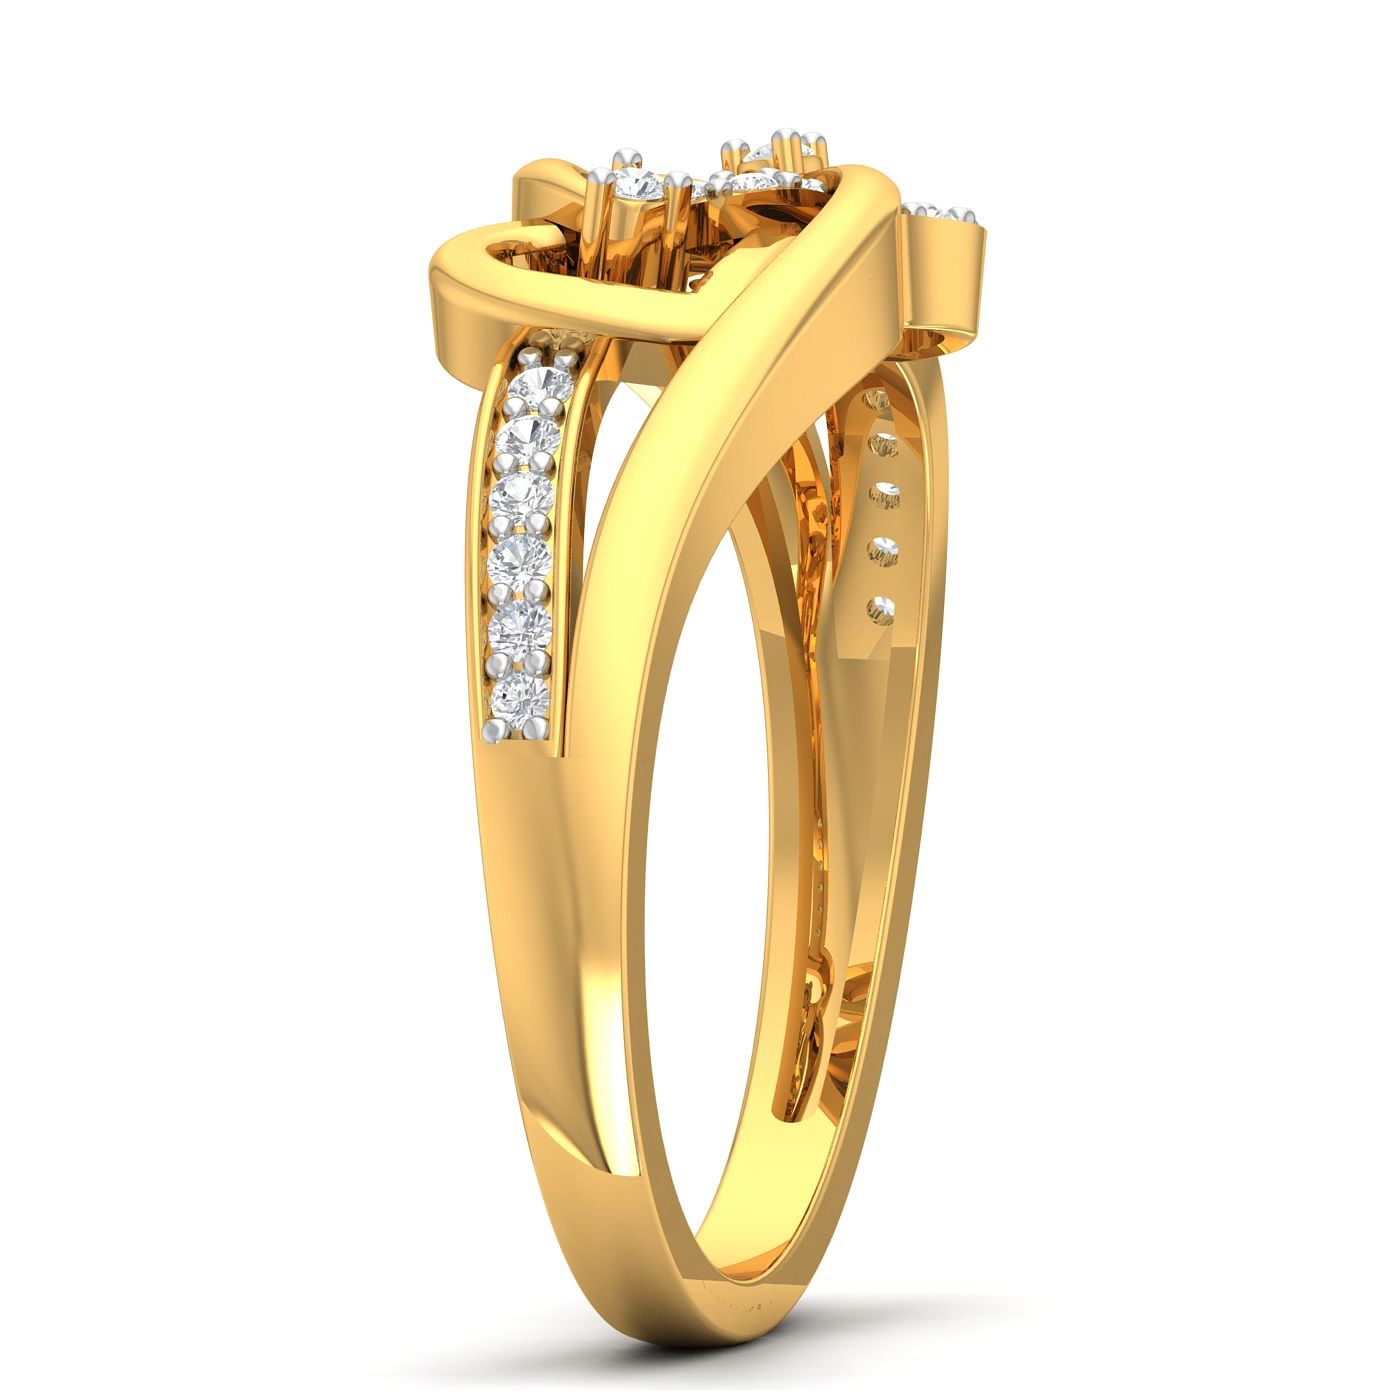 Modern Design 14k Yellow Gold Deep Dual Heart Ring For Her